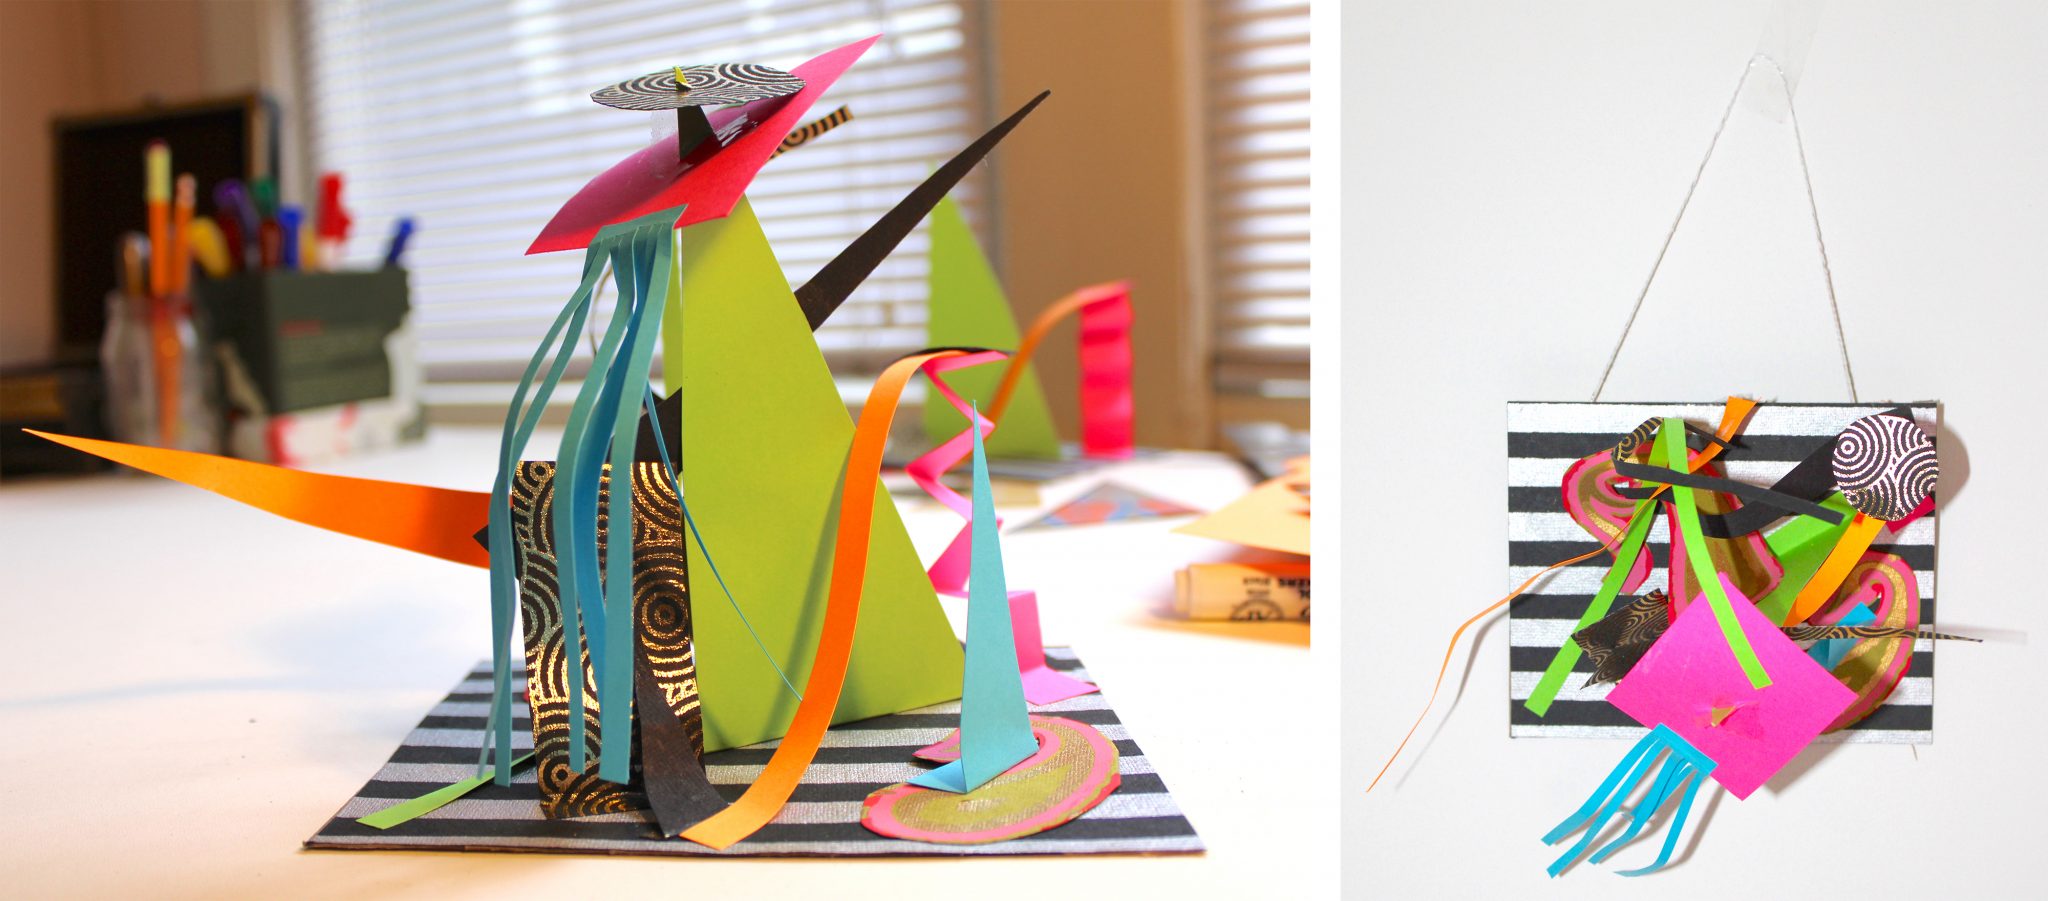 LACMA @ Home - Make a Paper Sculpture